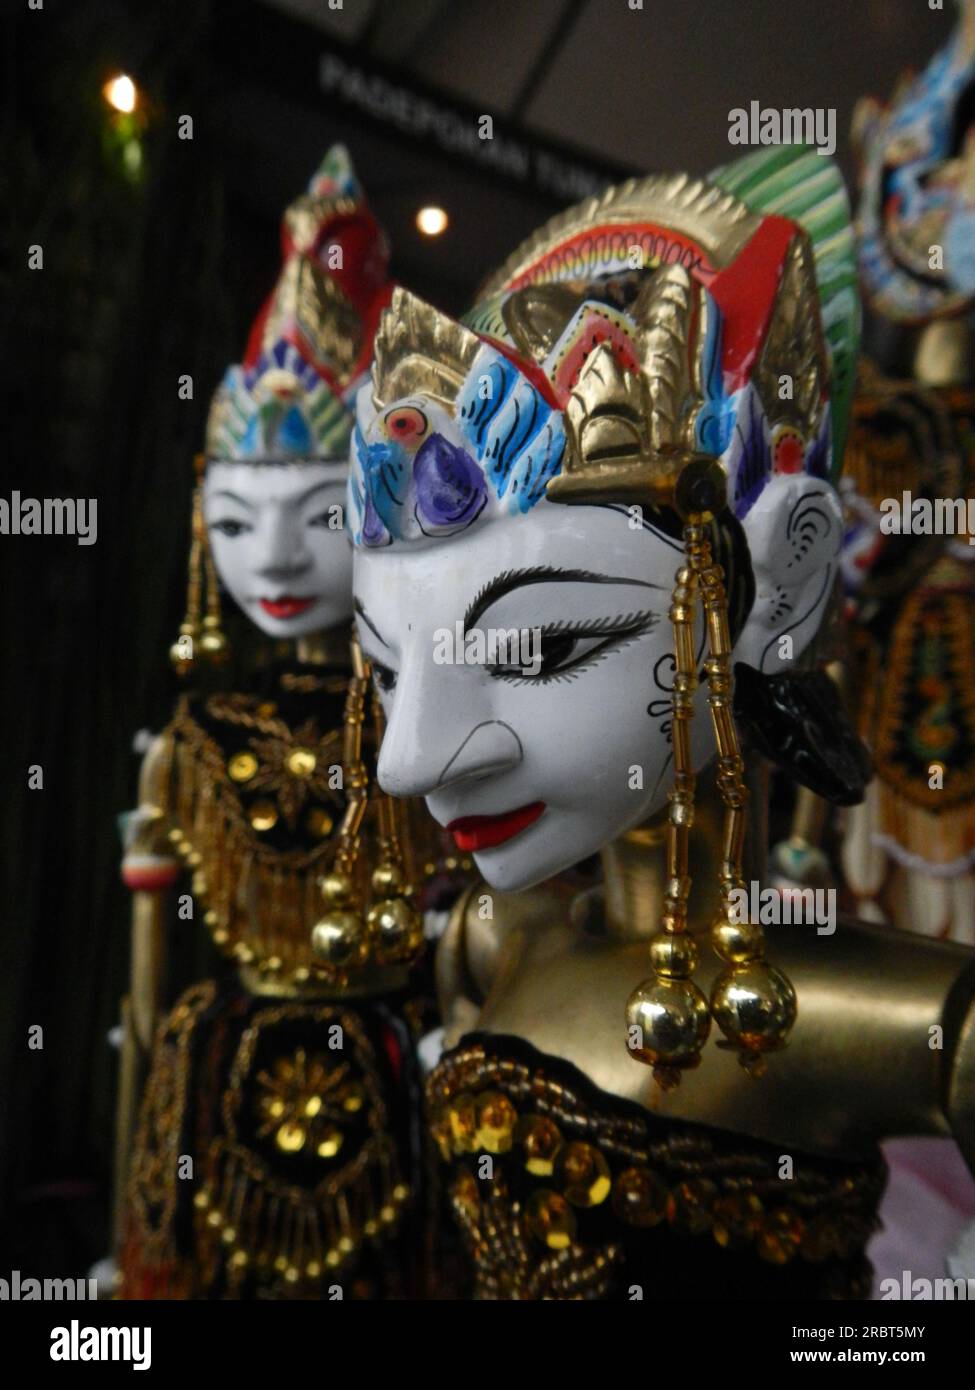 Wayang golek sundanese puppet show with female characters Stock Photo